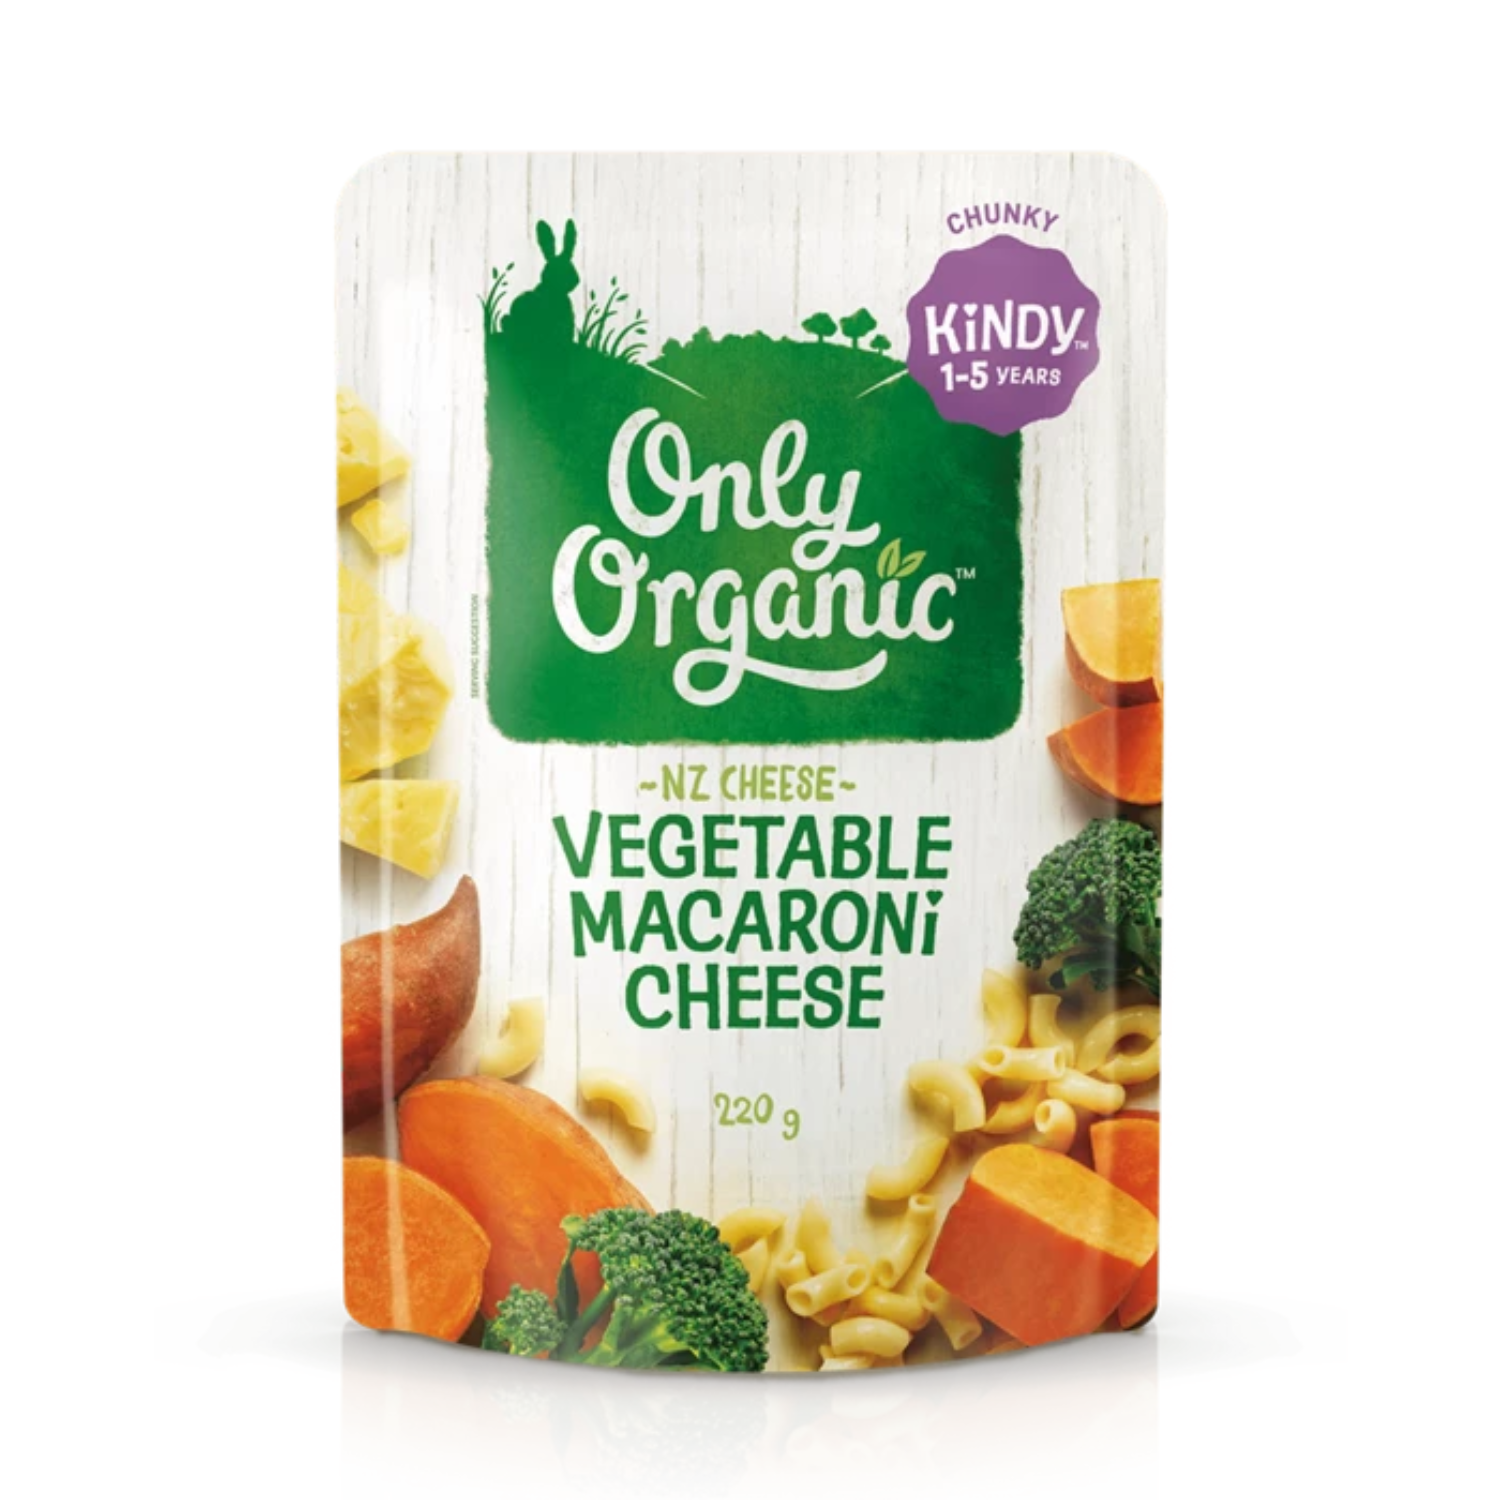 Only Organic Vegetable Macaroni Cheese, 220g (1-5 years)